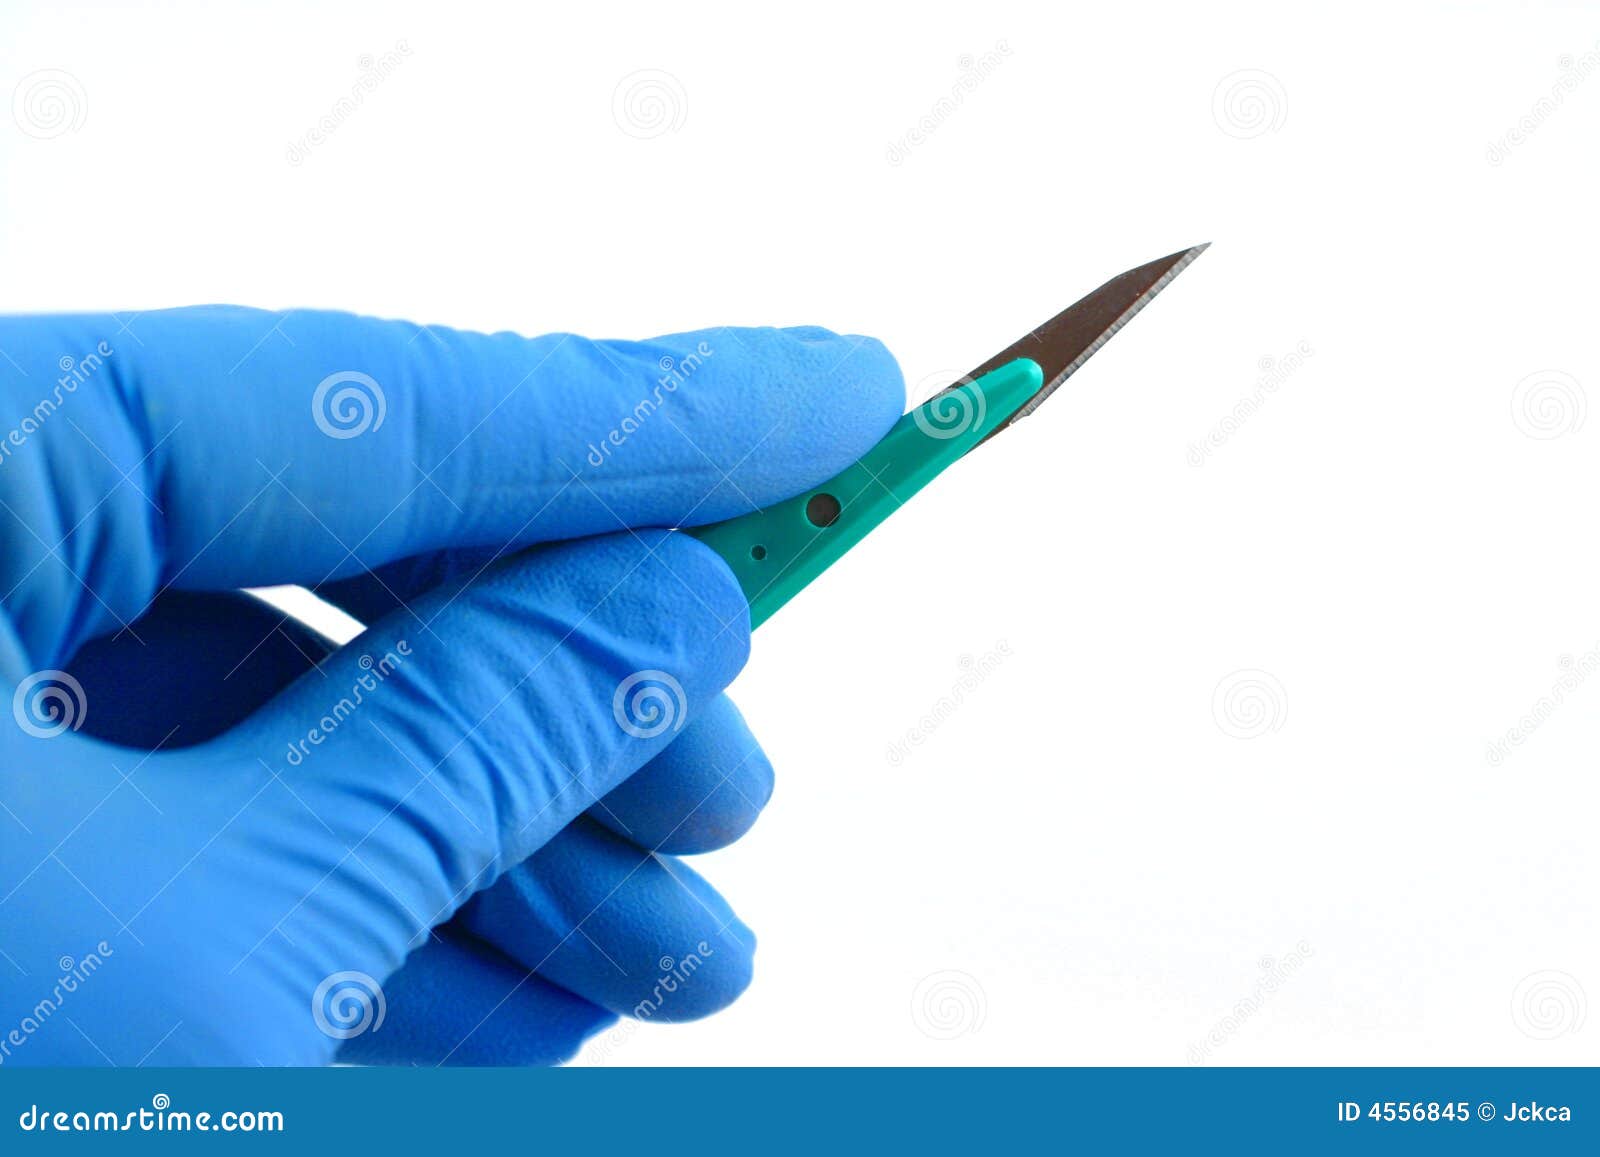 gloved hand holding scalpel